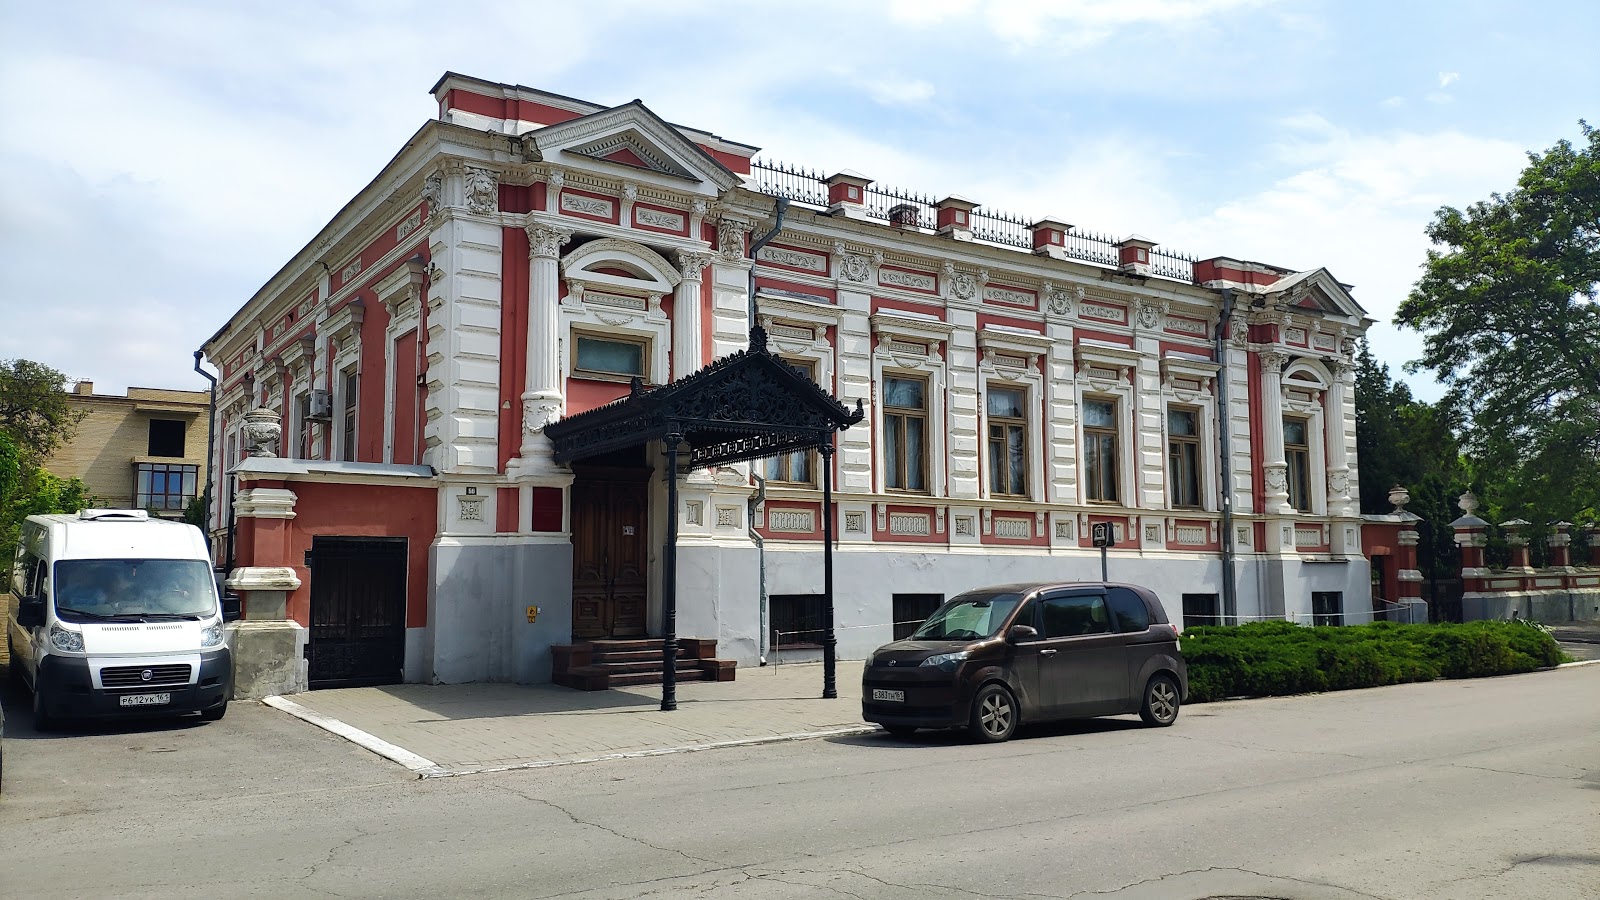 Taganrog Museum of Art